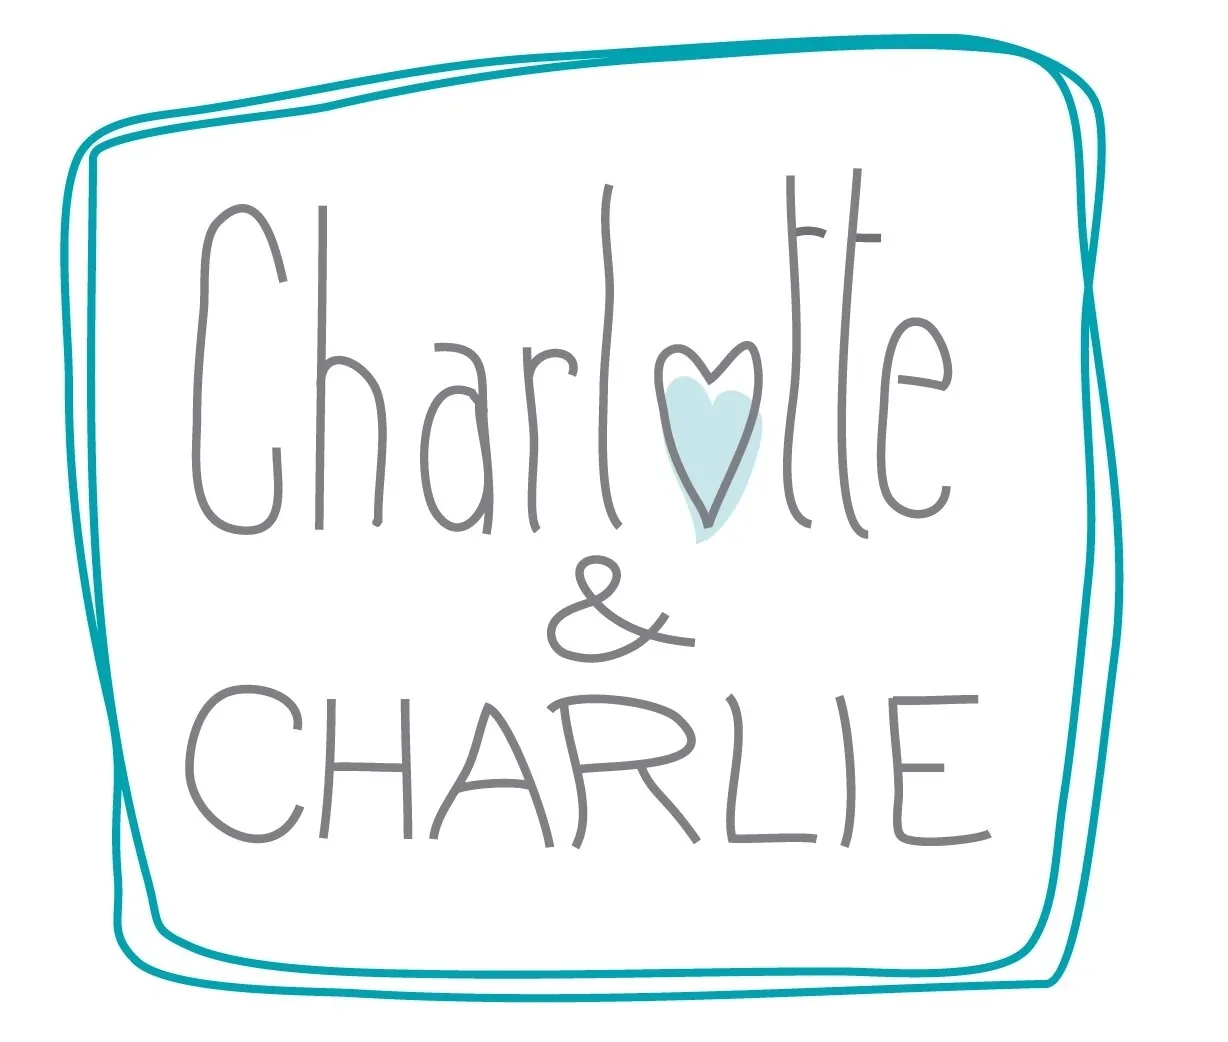 Circulaires Charlotte et Charlie